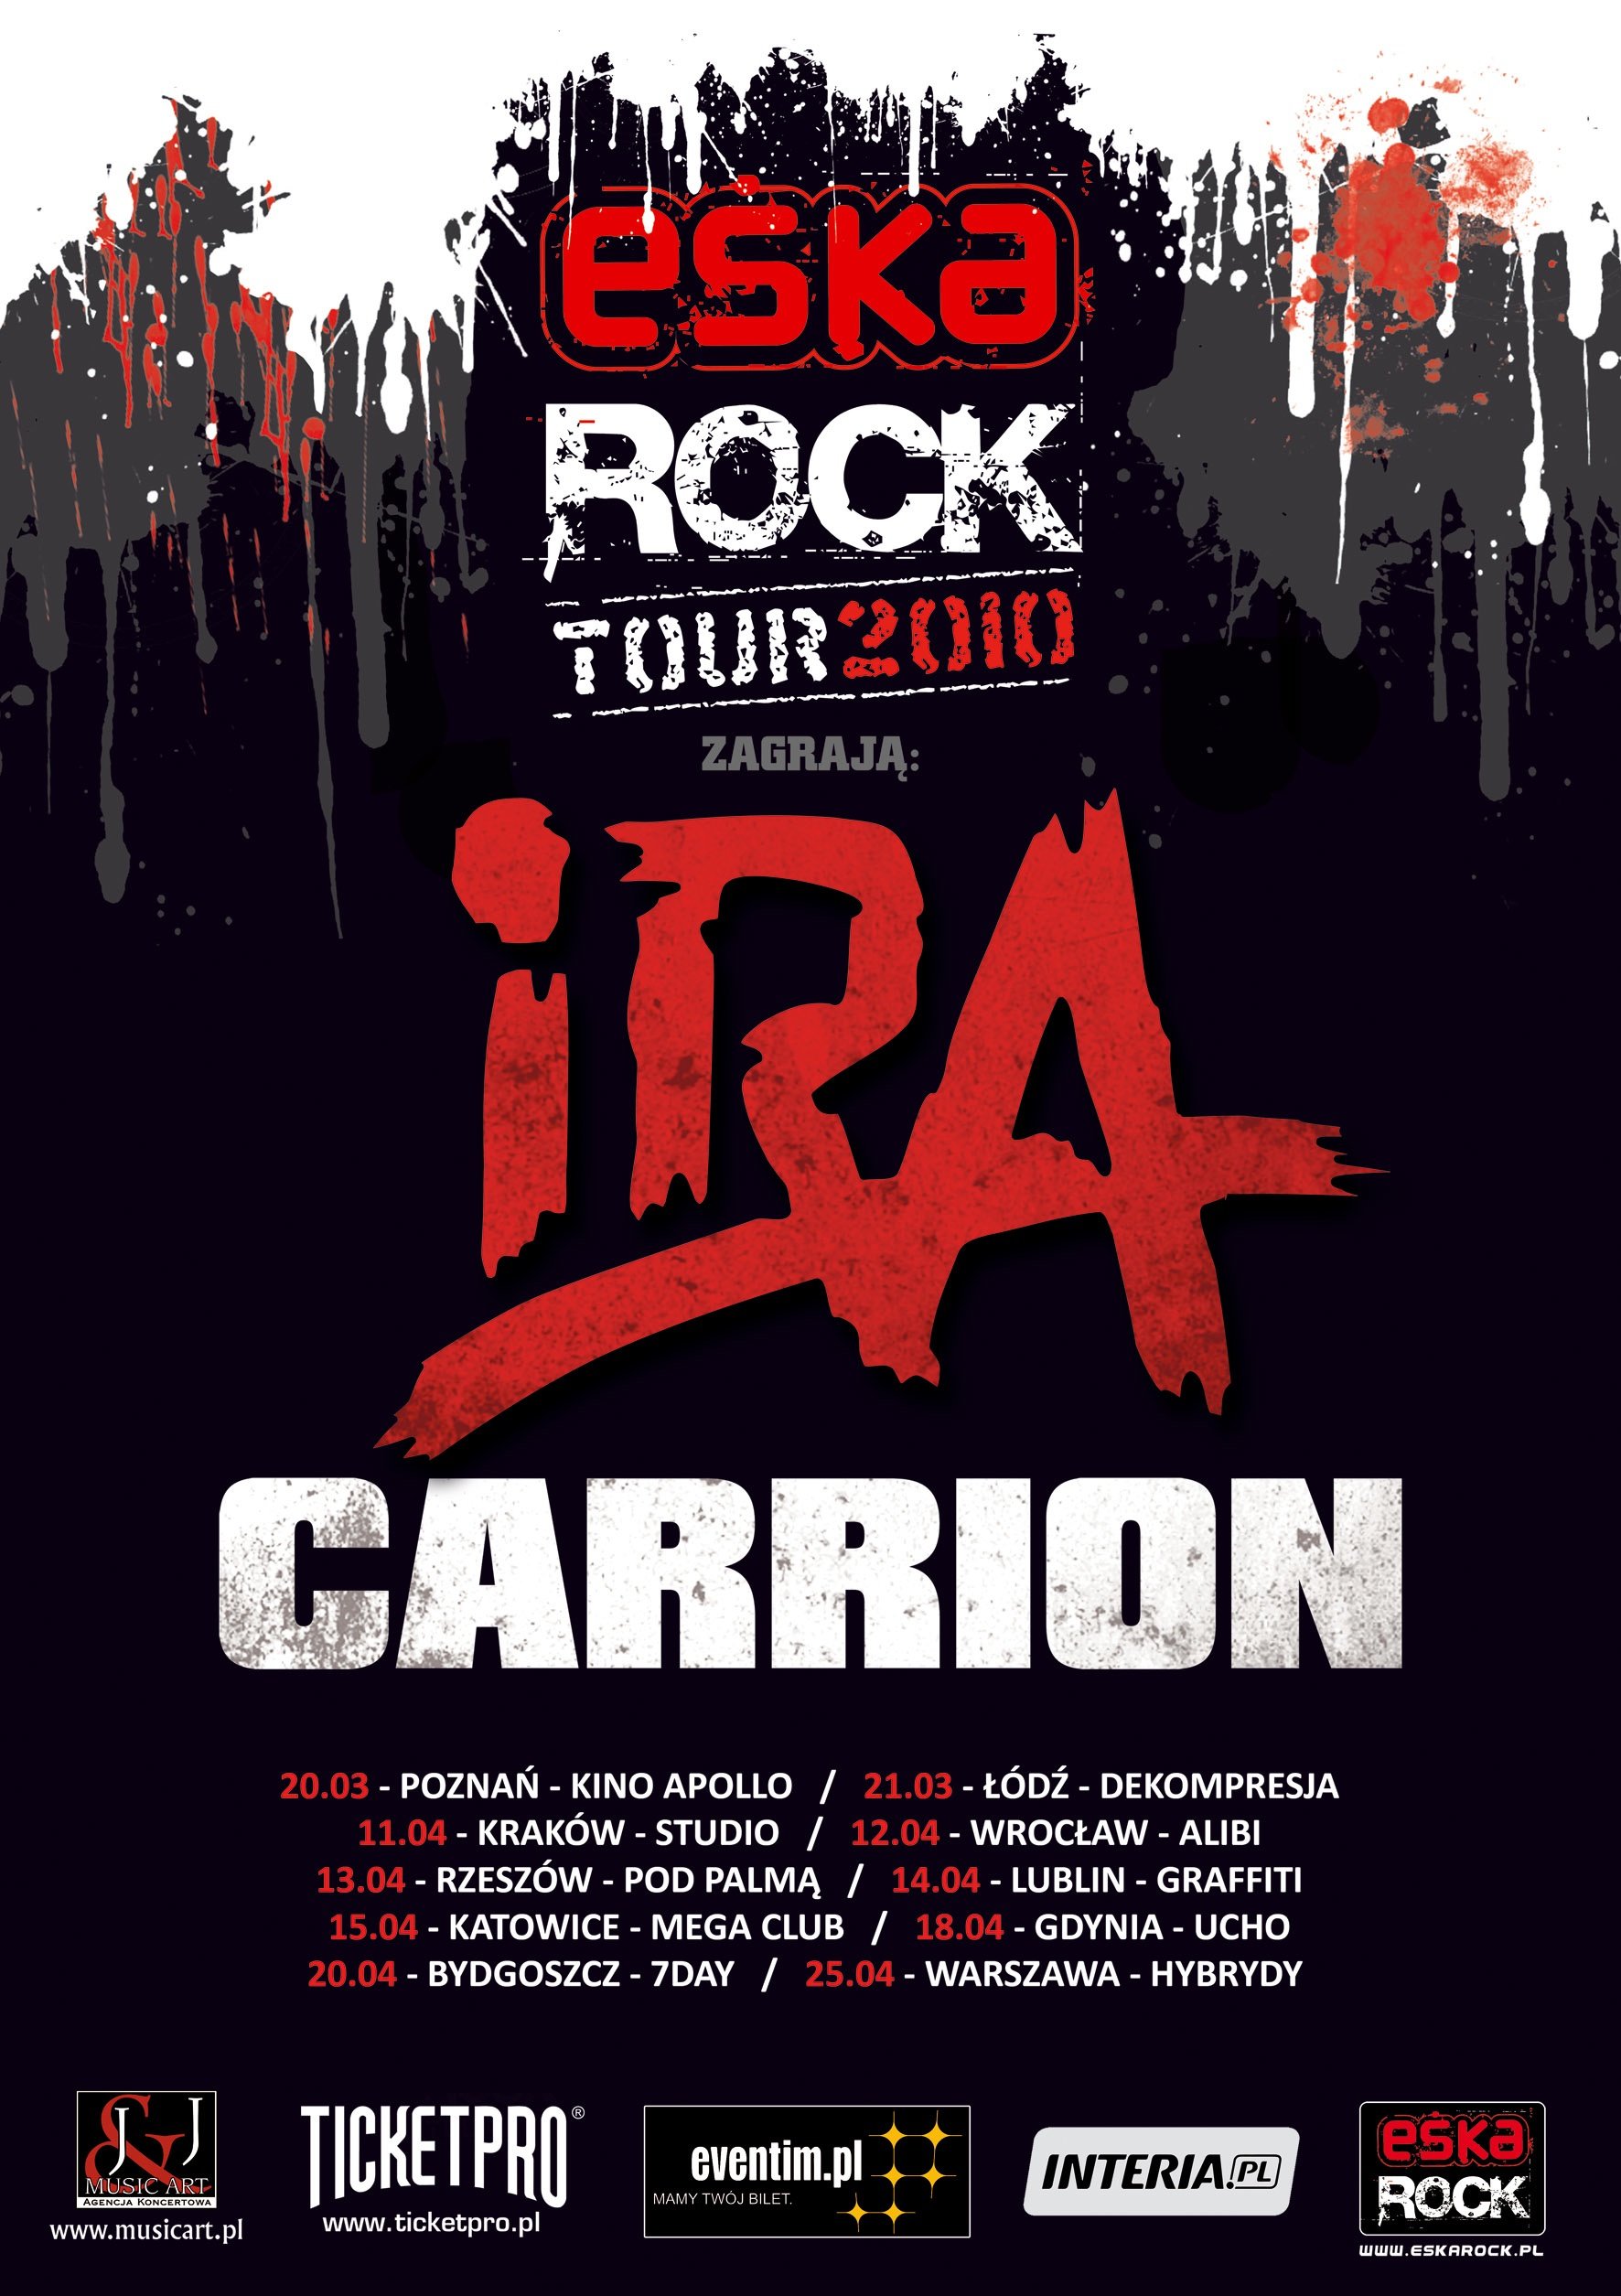 World wide Fly kite pressure ESKA ROCK TOUR 2010: IRA & CARRION at Mega Club (Katowice) on 27 Apr 2010 |  Last.fm